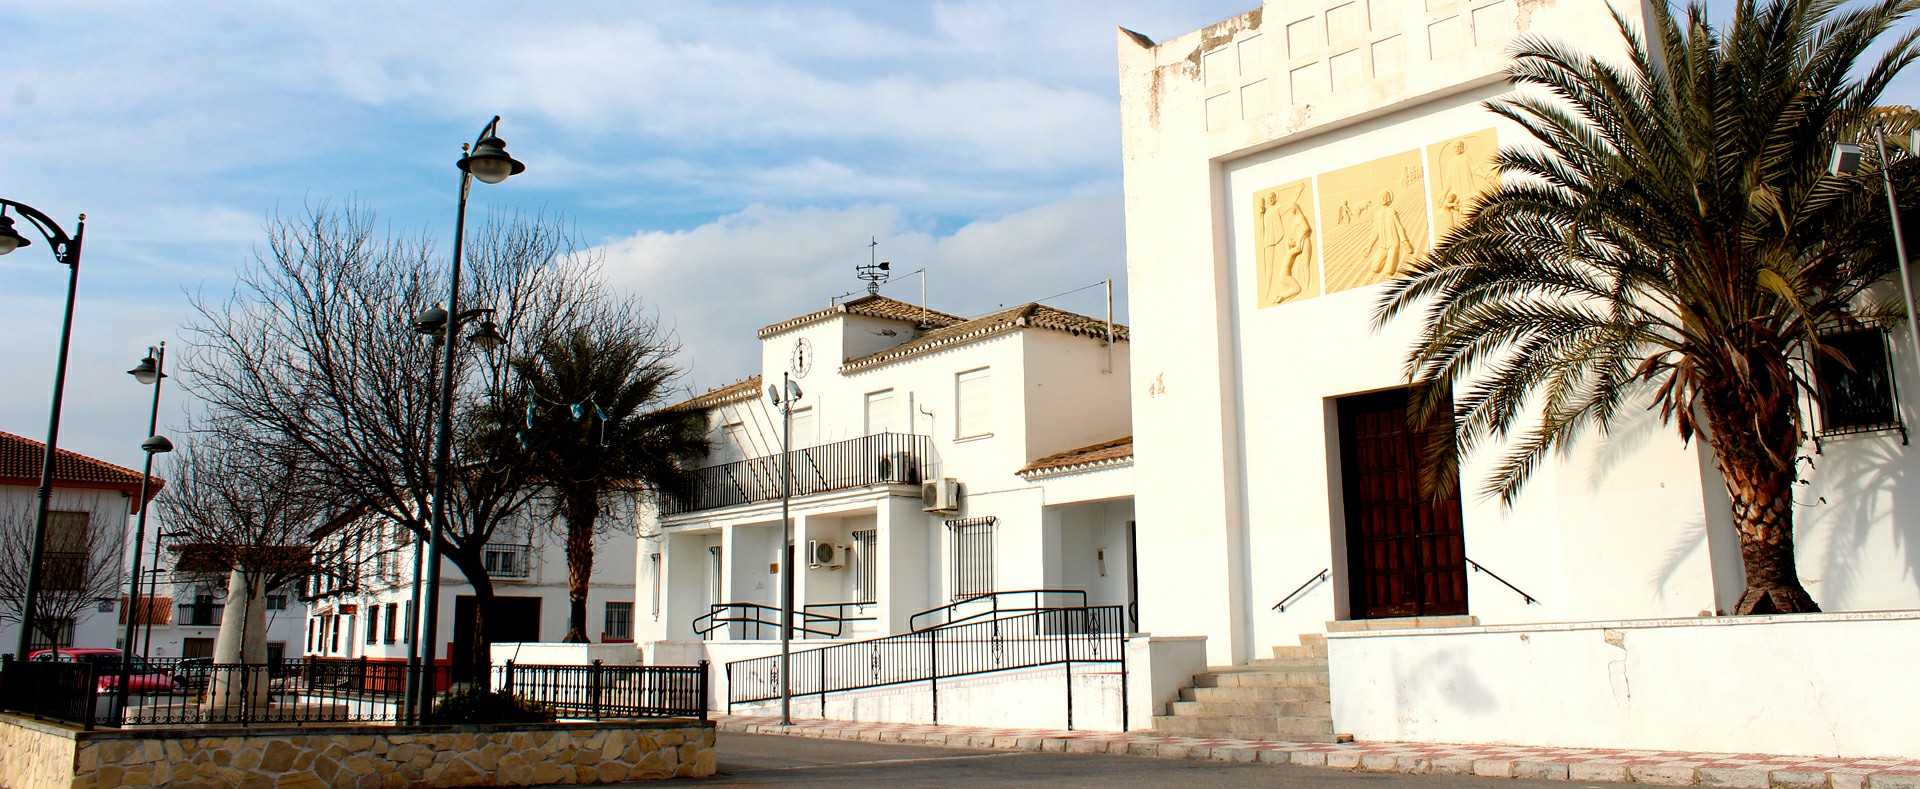 Plaza de la Iglesia de Fuensanta